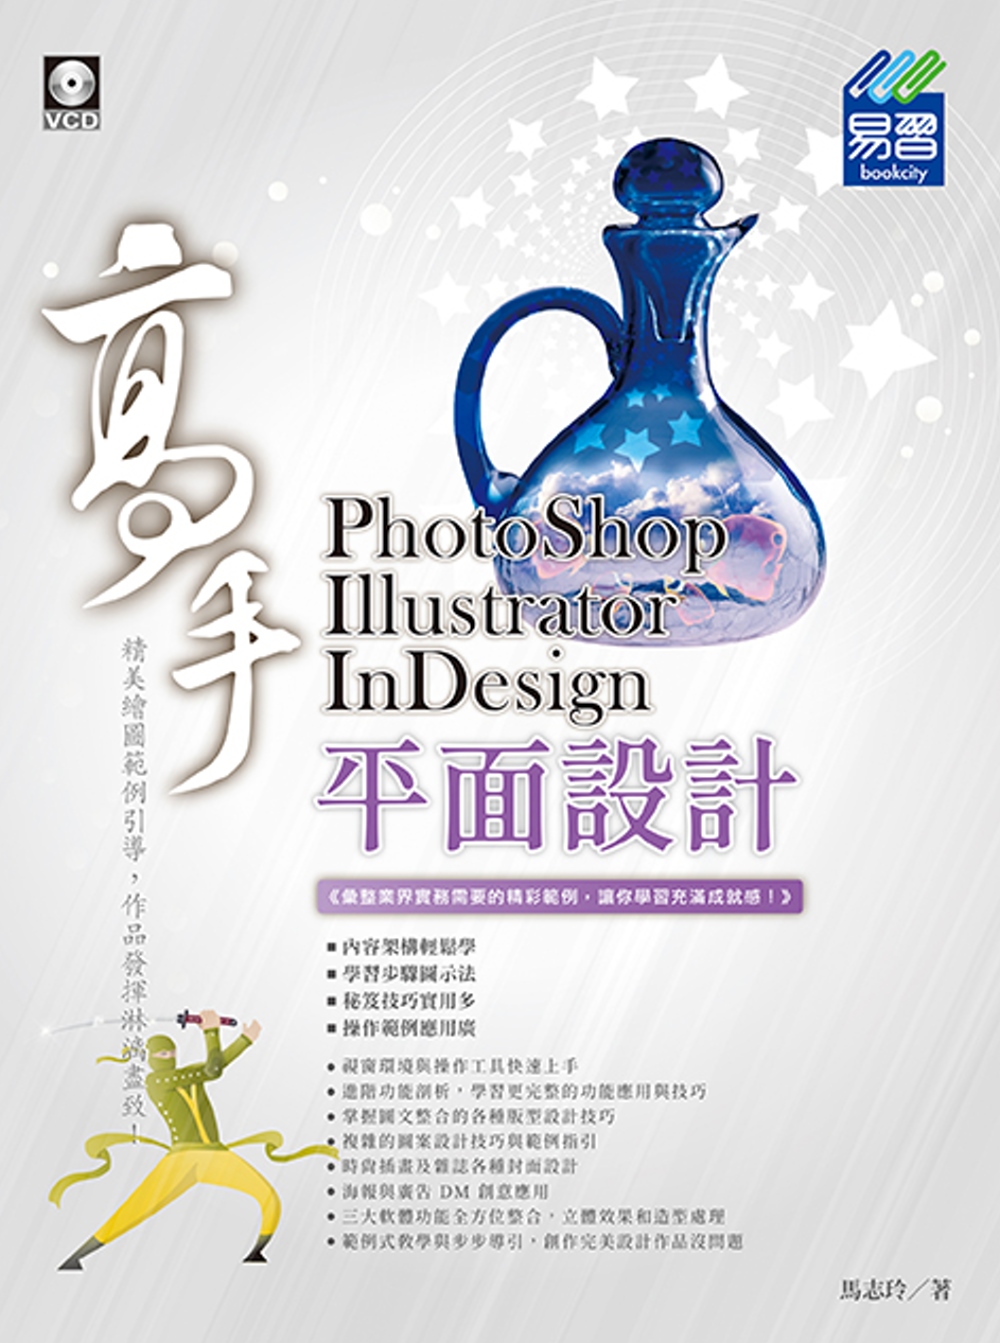 PhotoShop、Illustrator、InDesign...